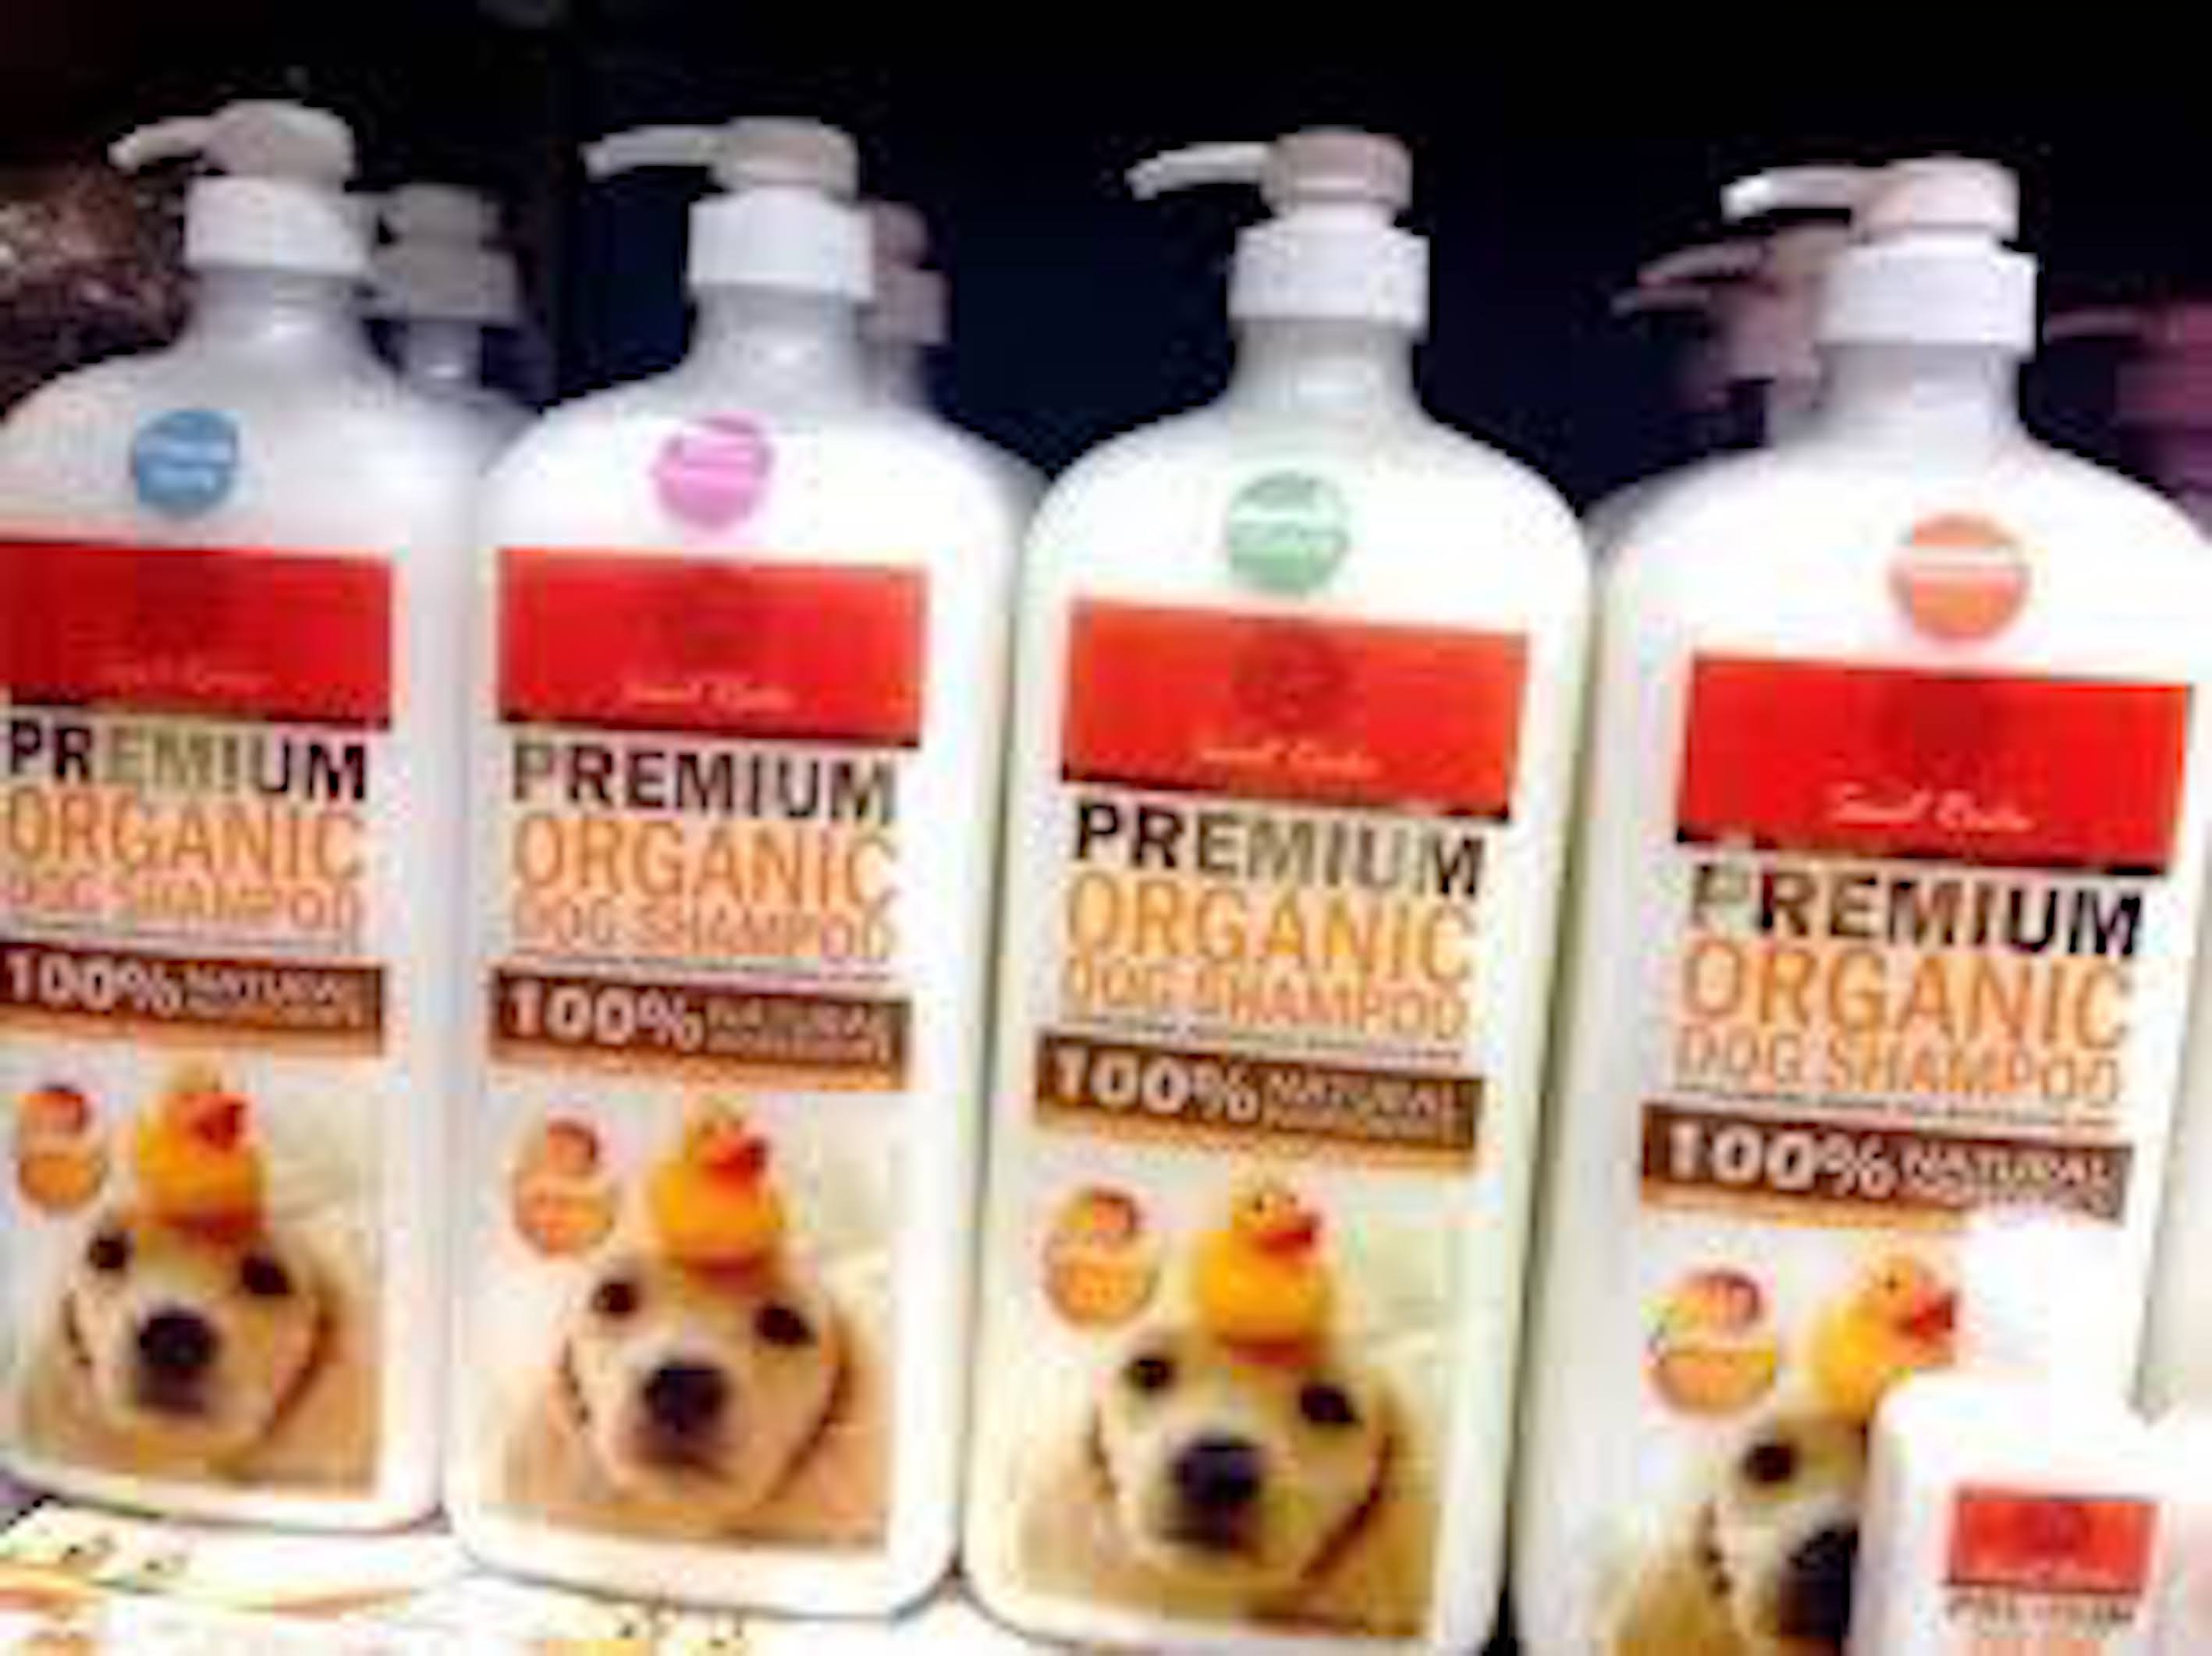 saint roche dog shampoo